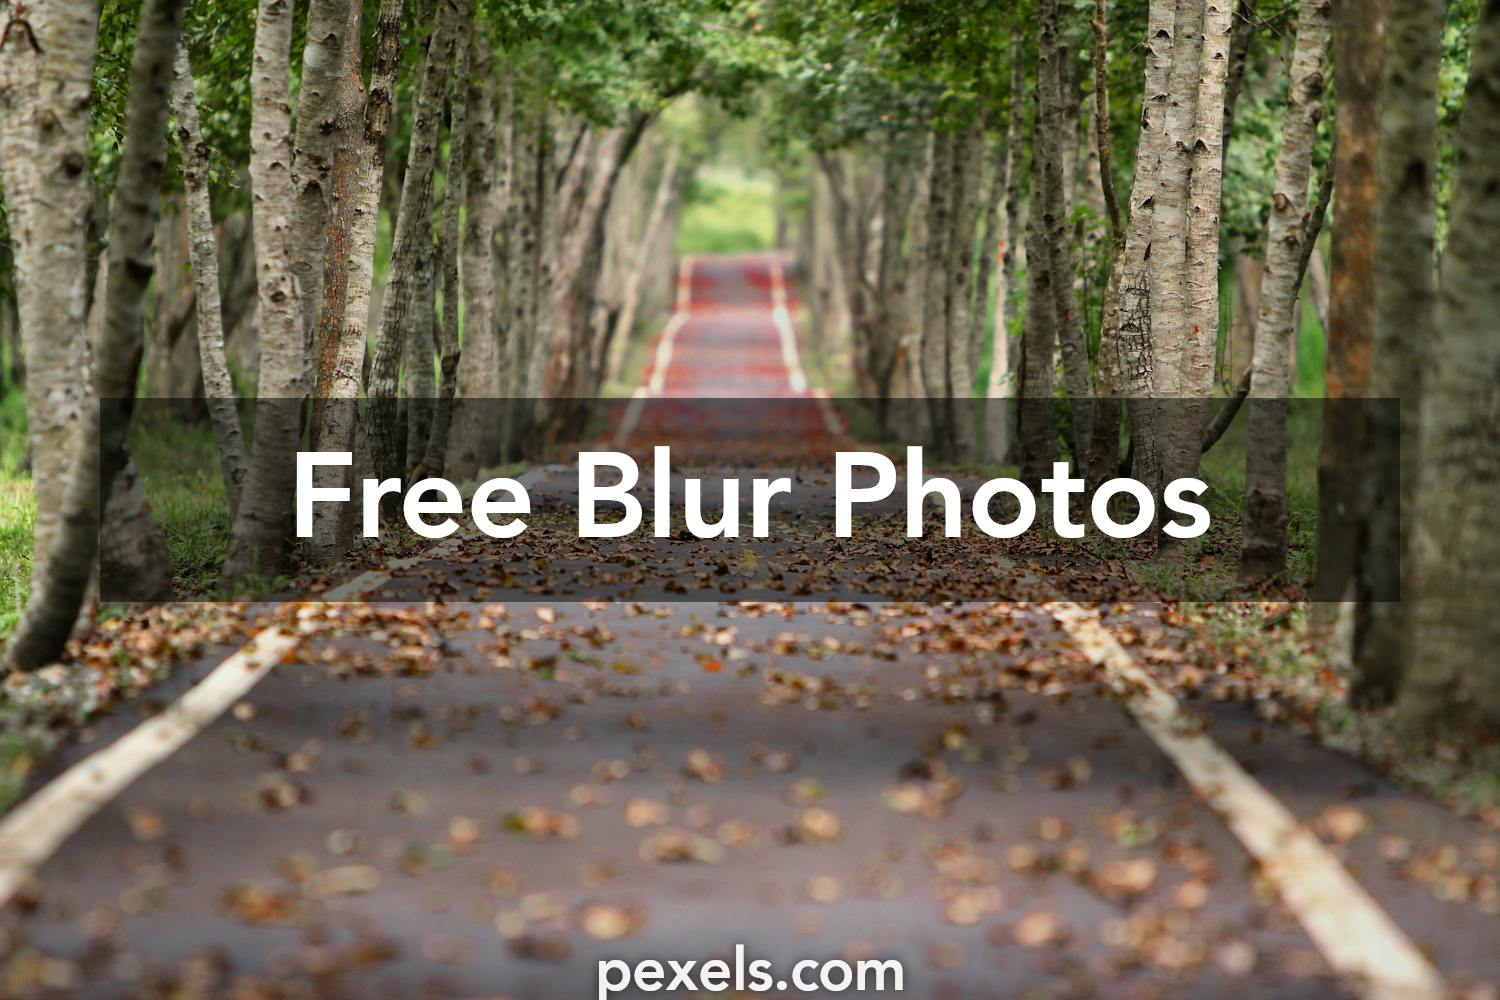 Blur Images Pexels Free Stock Photos